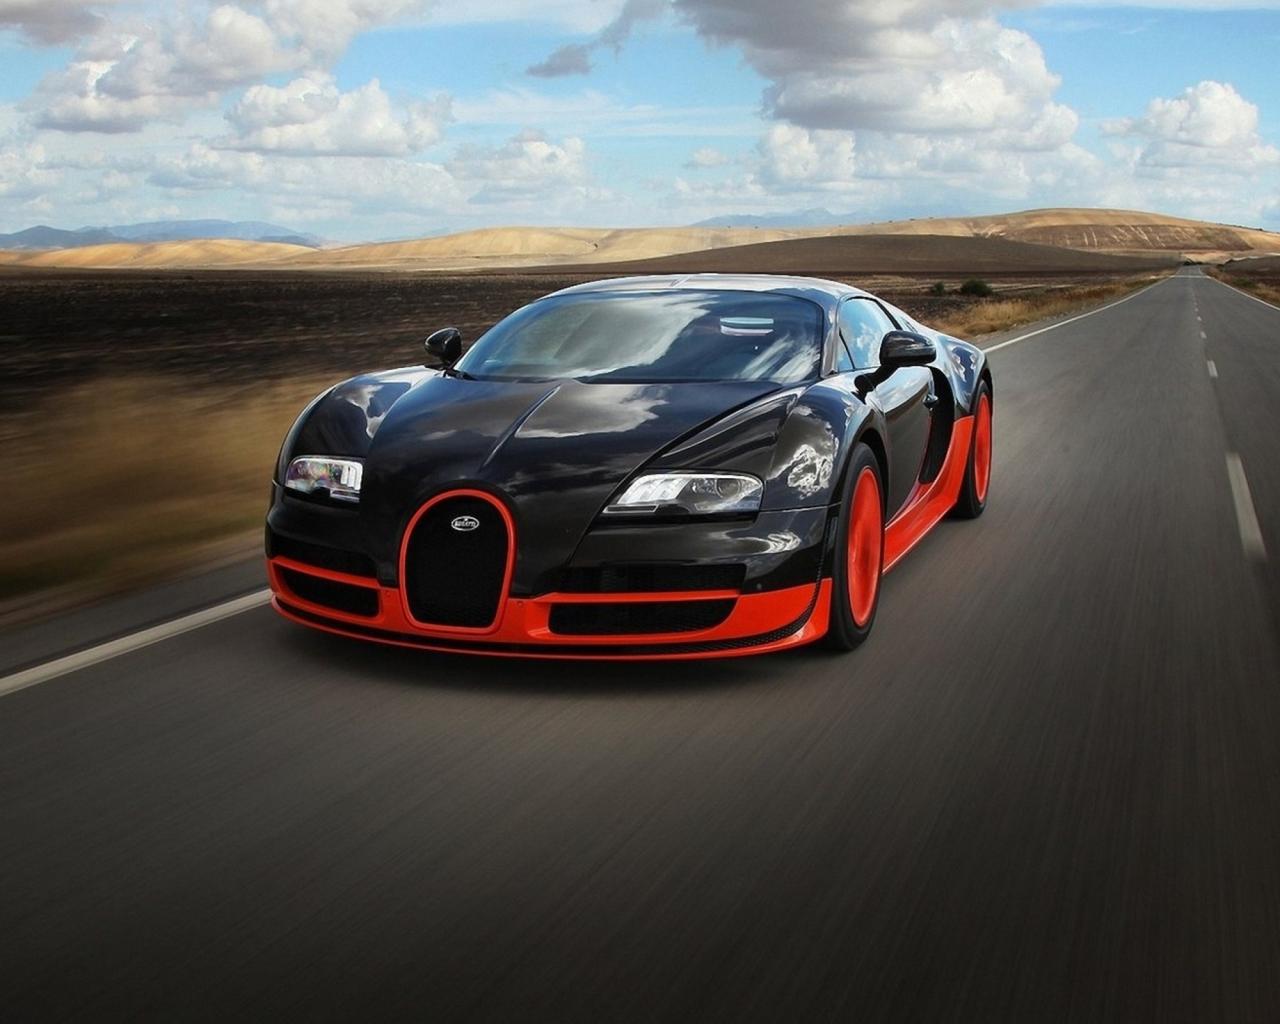 Red Bugatti Veyron Wallpaper HD In Cars Imageci